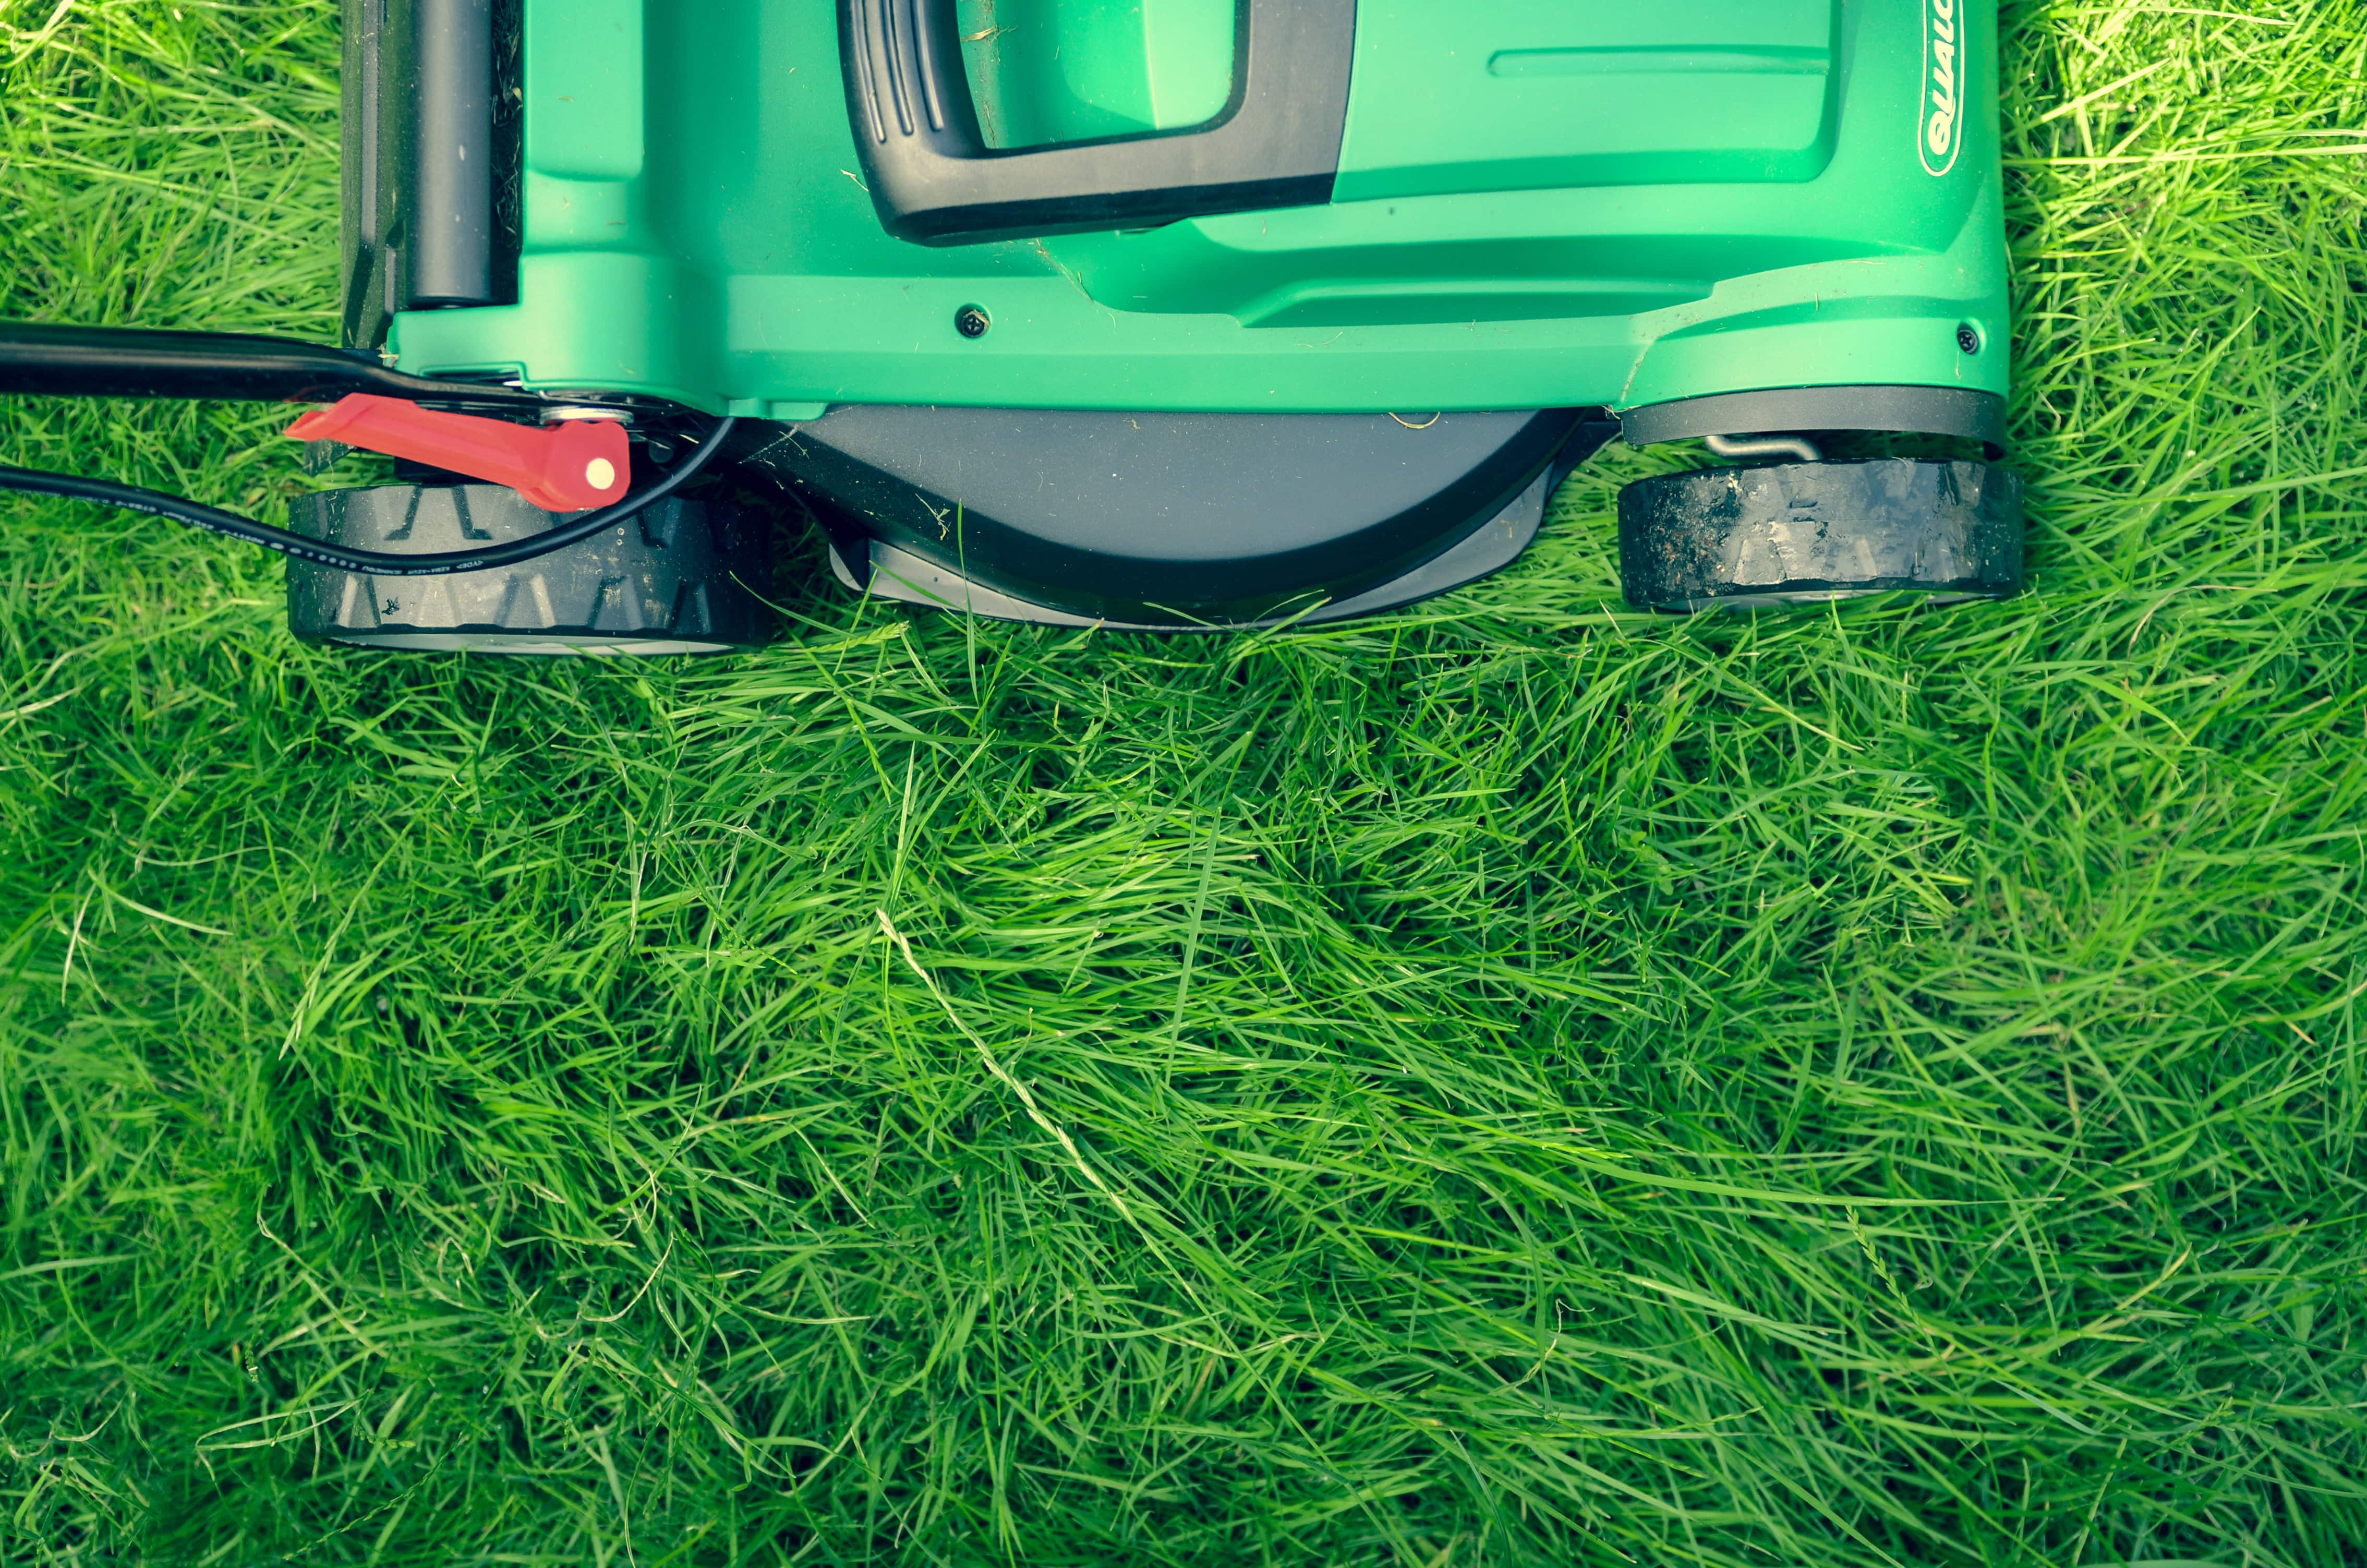 green lawnmower on grass